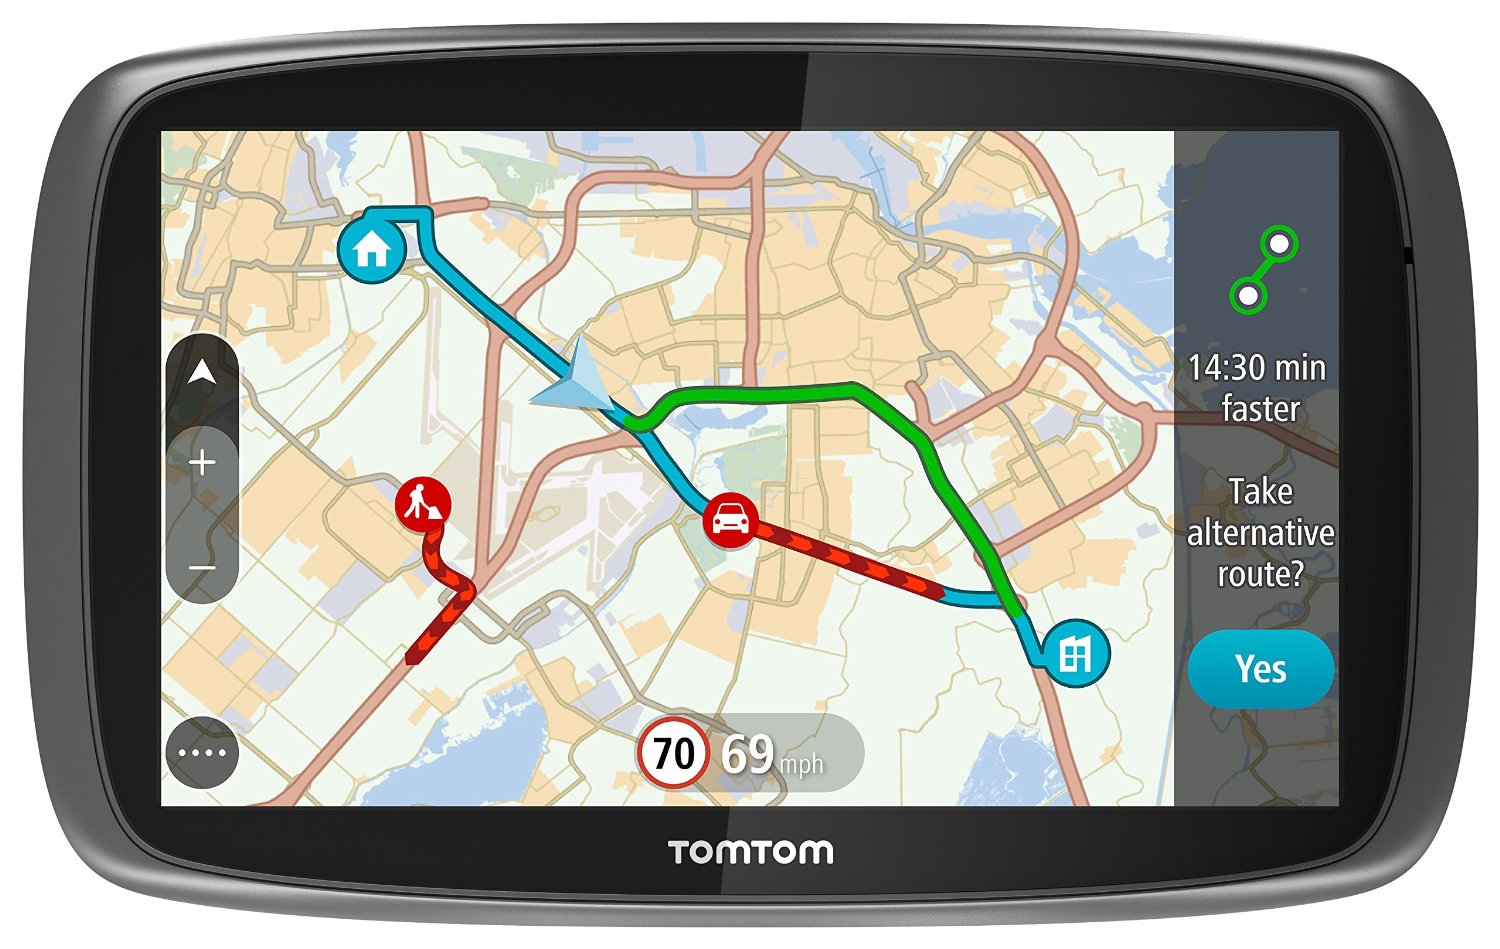 Sistem de navigatie TomTom GO 5100, Ecran 5", Actualizari gratuite alte hartilor